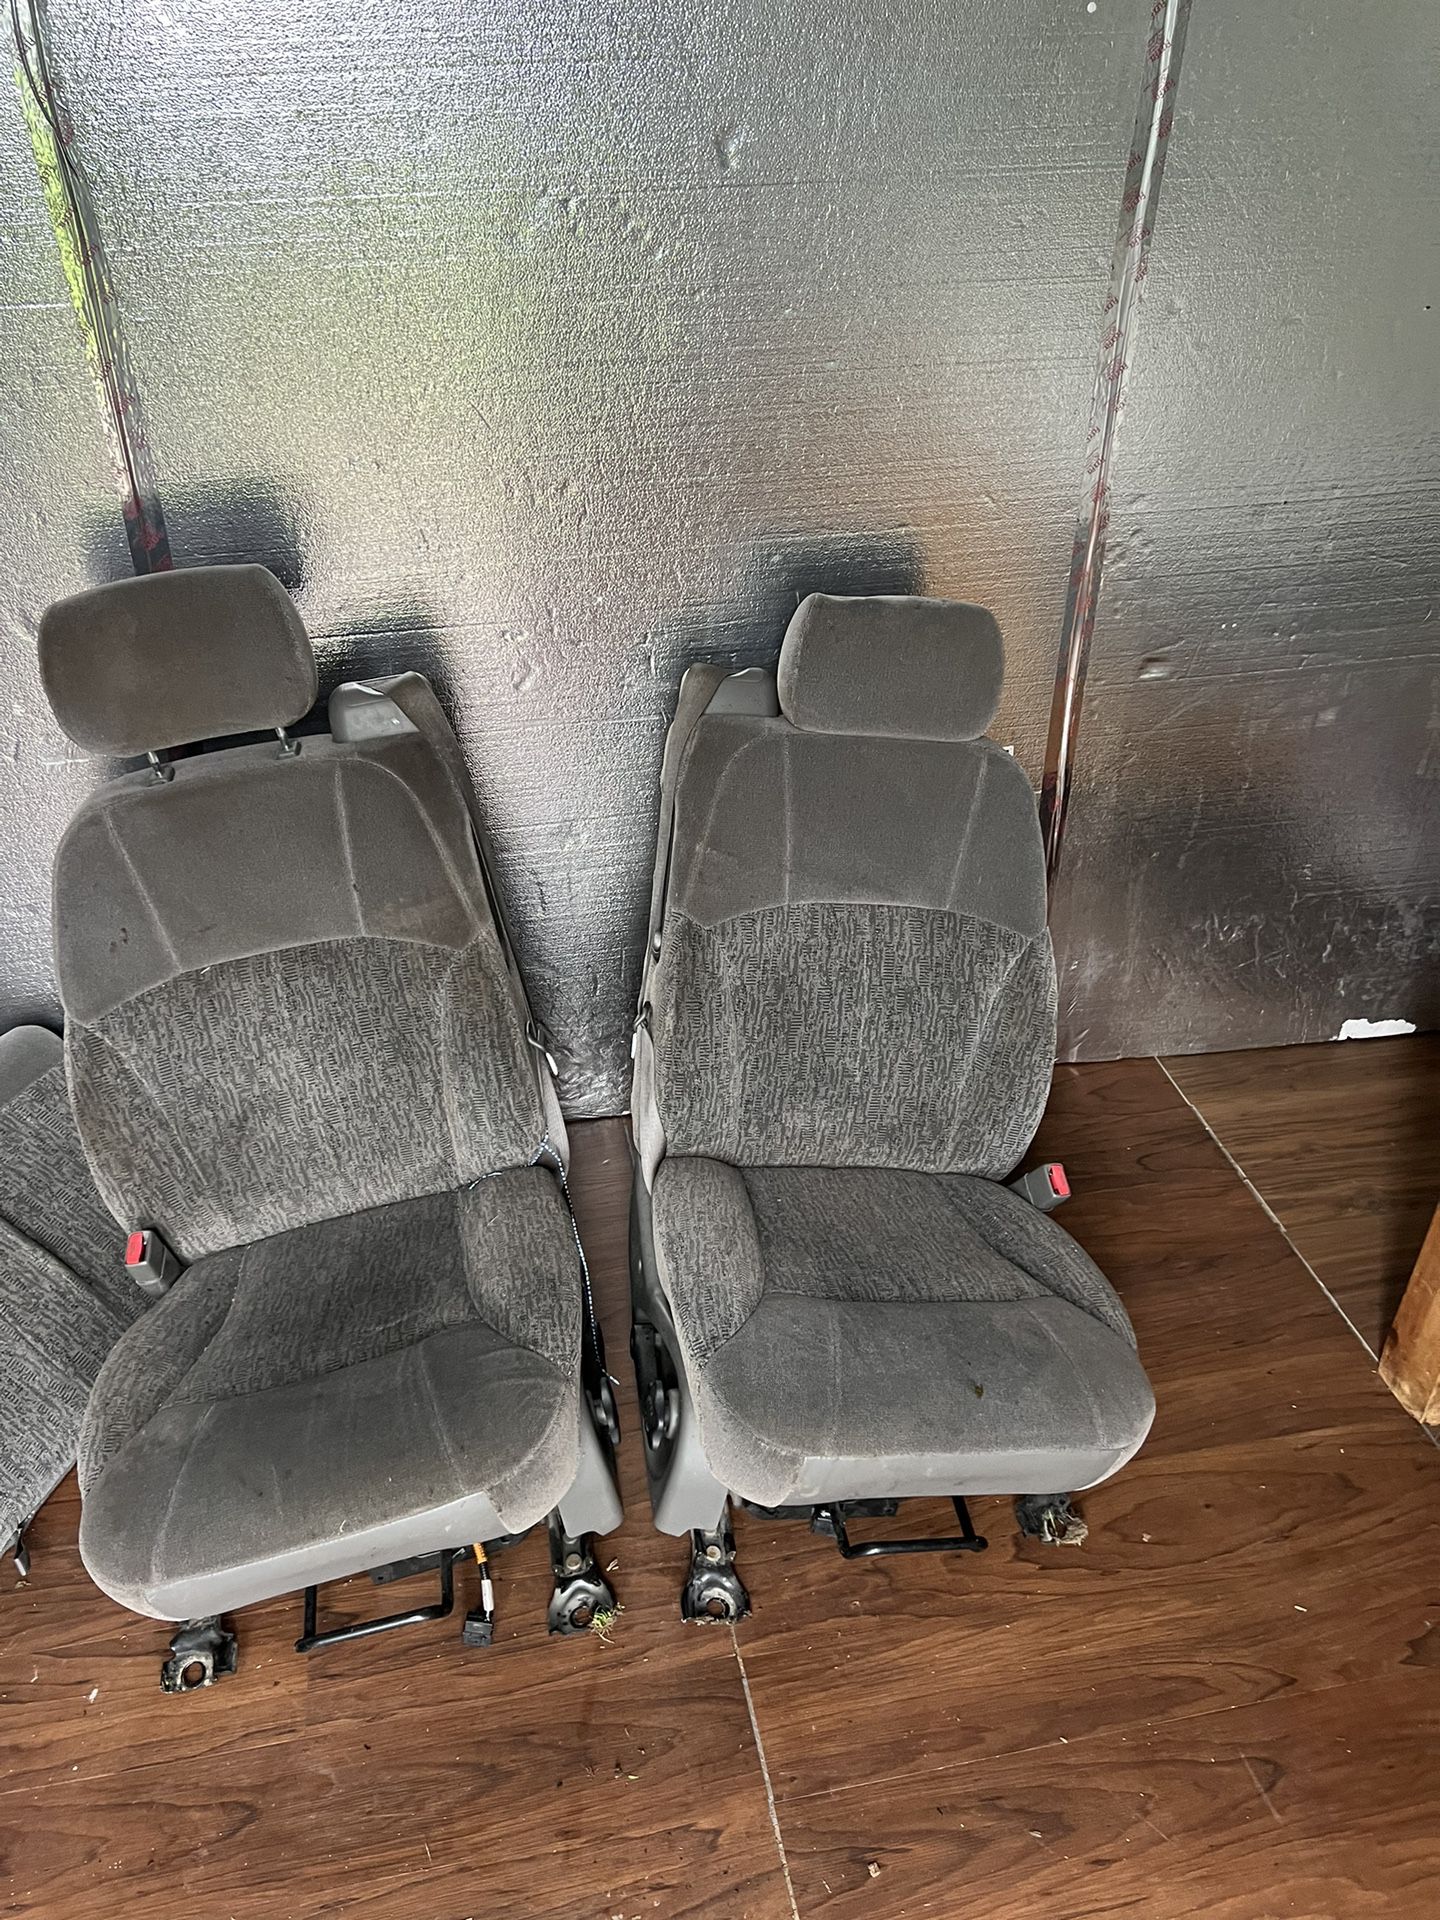 Chevy Trail Blazer Seats